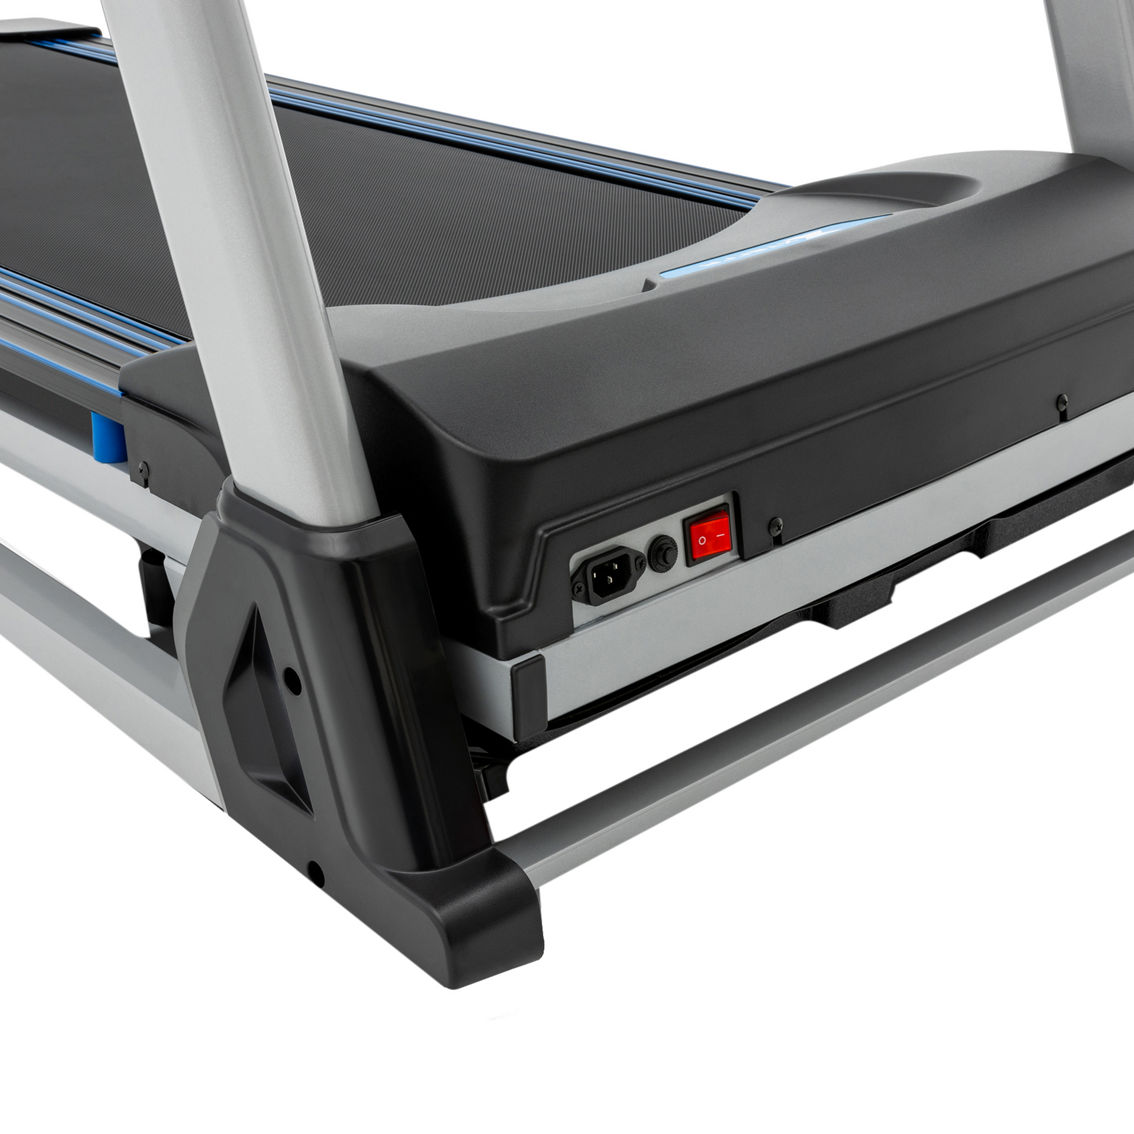 XTERRA Fitness TRX1400 Folding Treadmill - Image 9 of 9